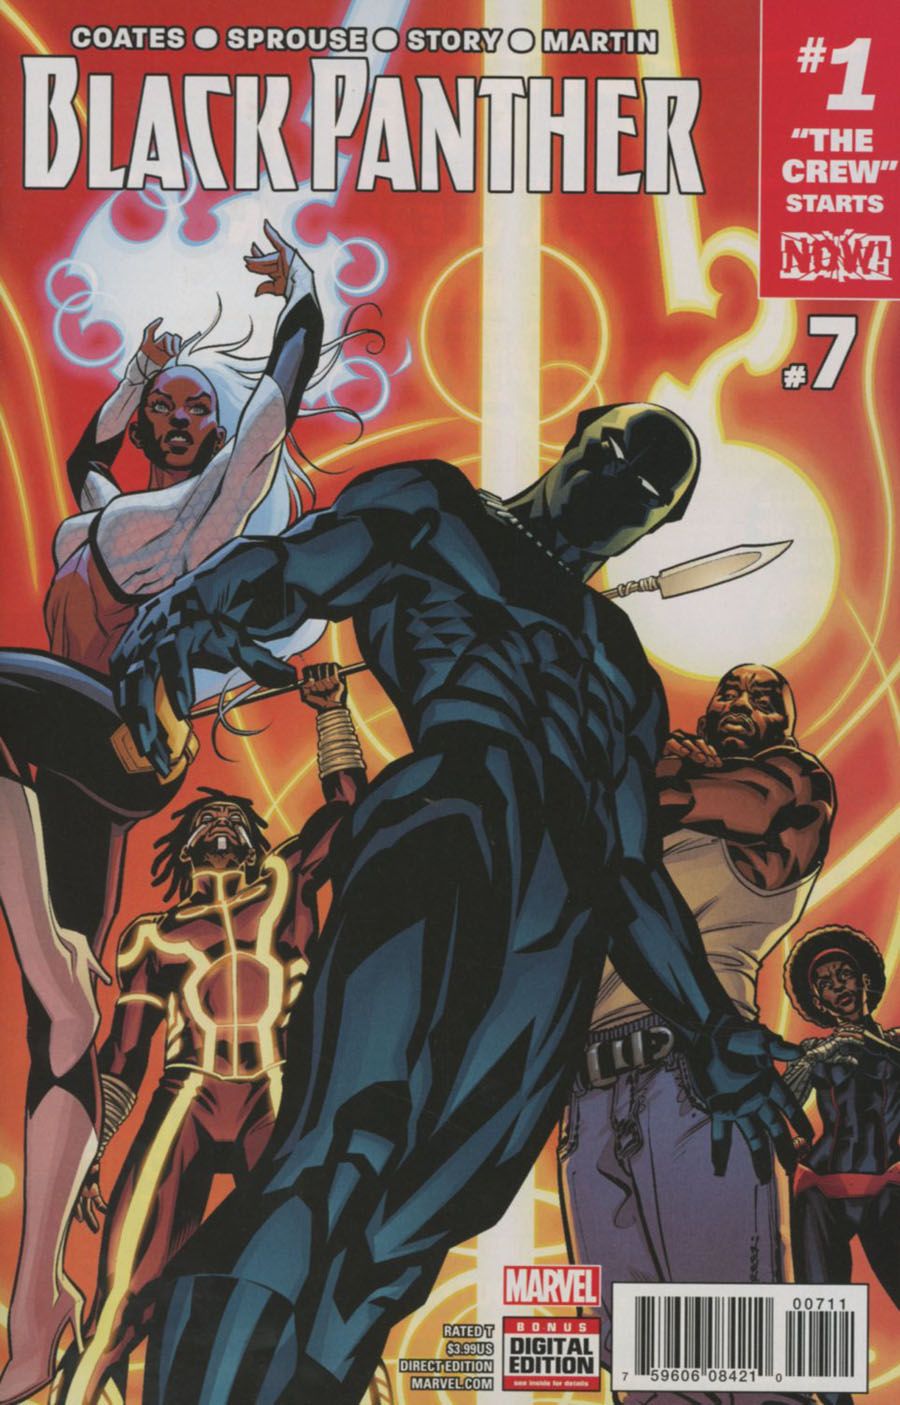 Now Black Panther #7 Comic